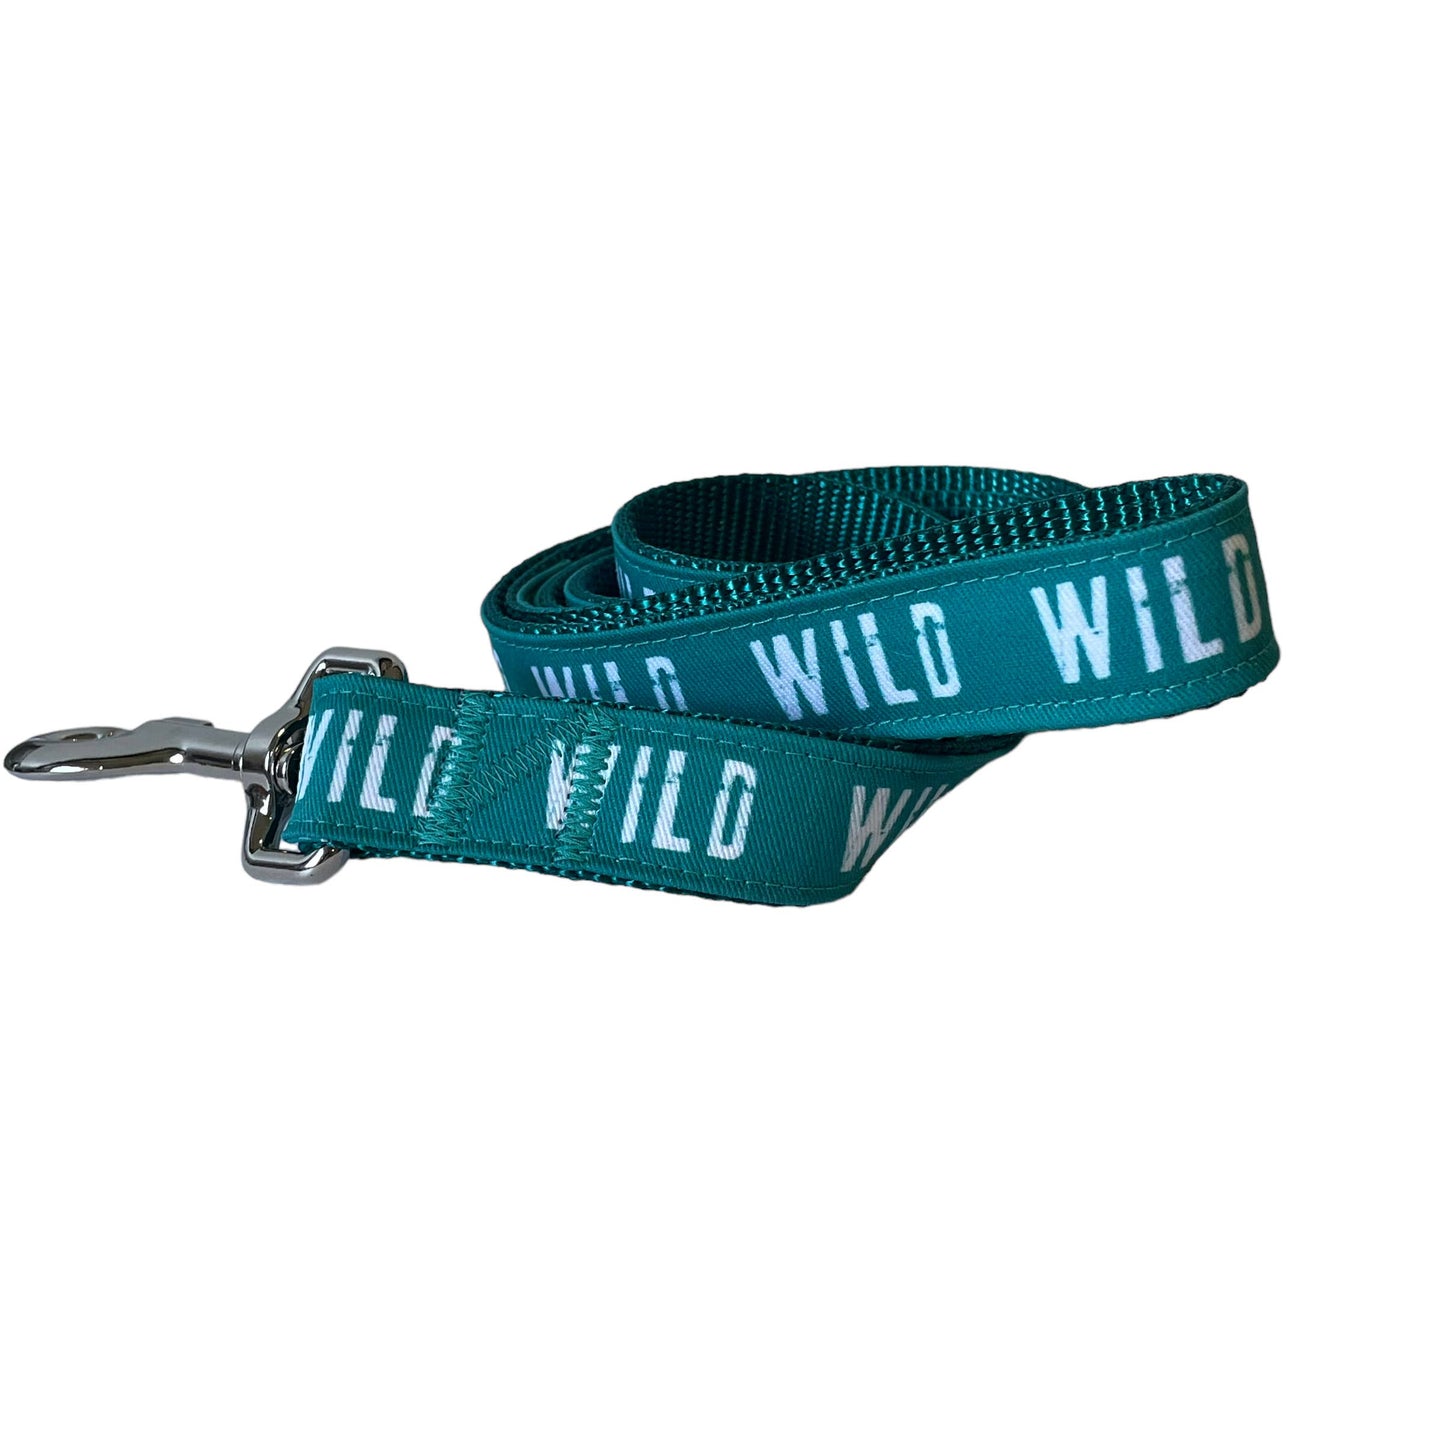 WILD Teal Dog Collar, Adventure, Hiking, Maine Made